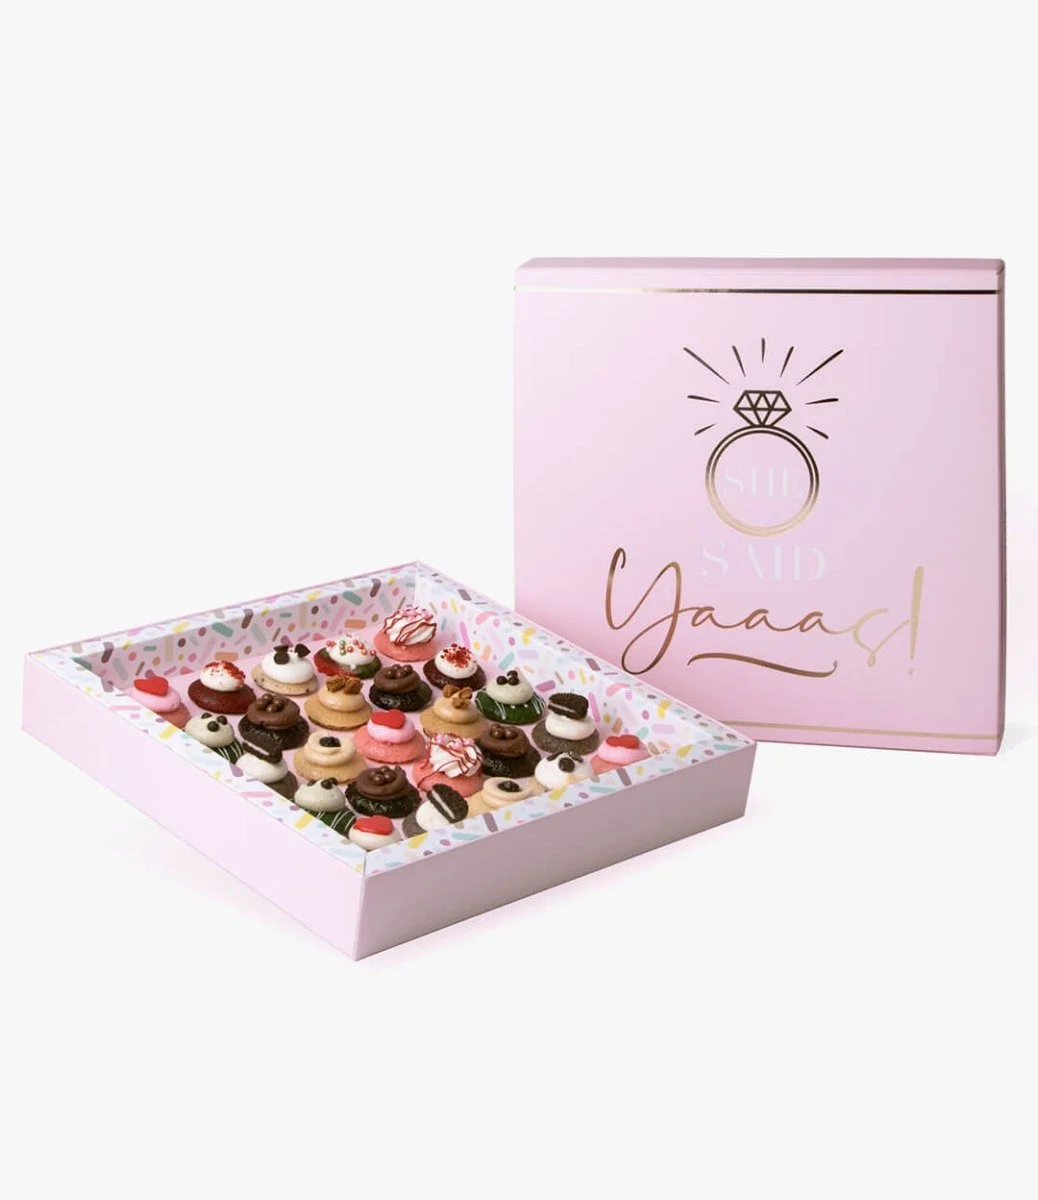 The Bride Mini Cupcakes by The Sugargram